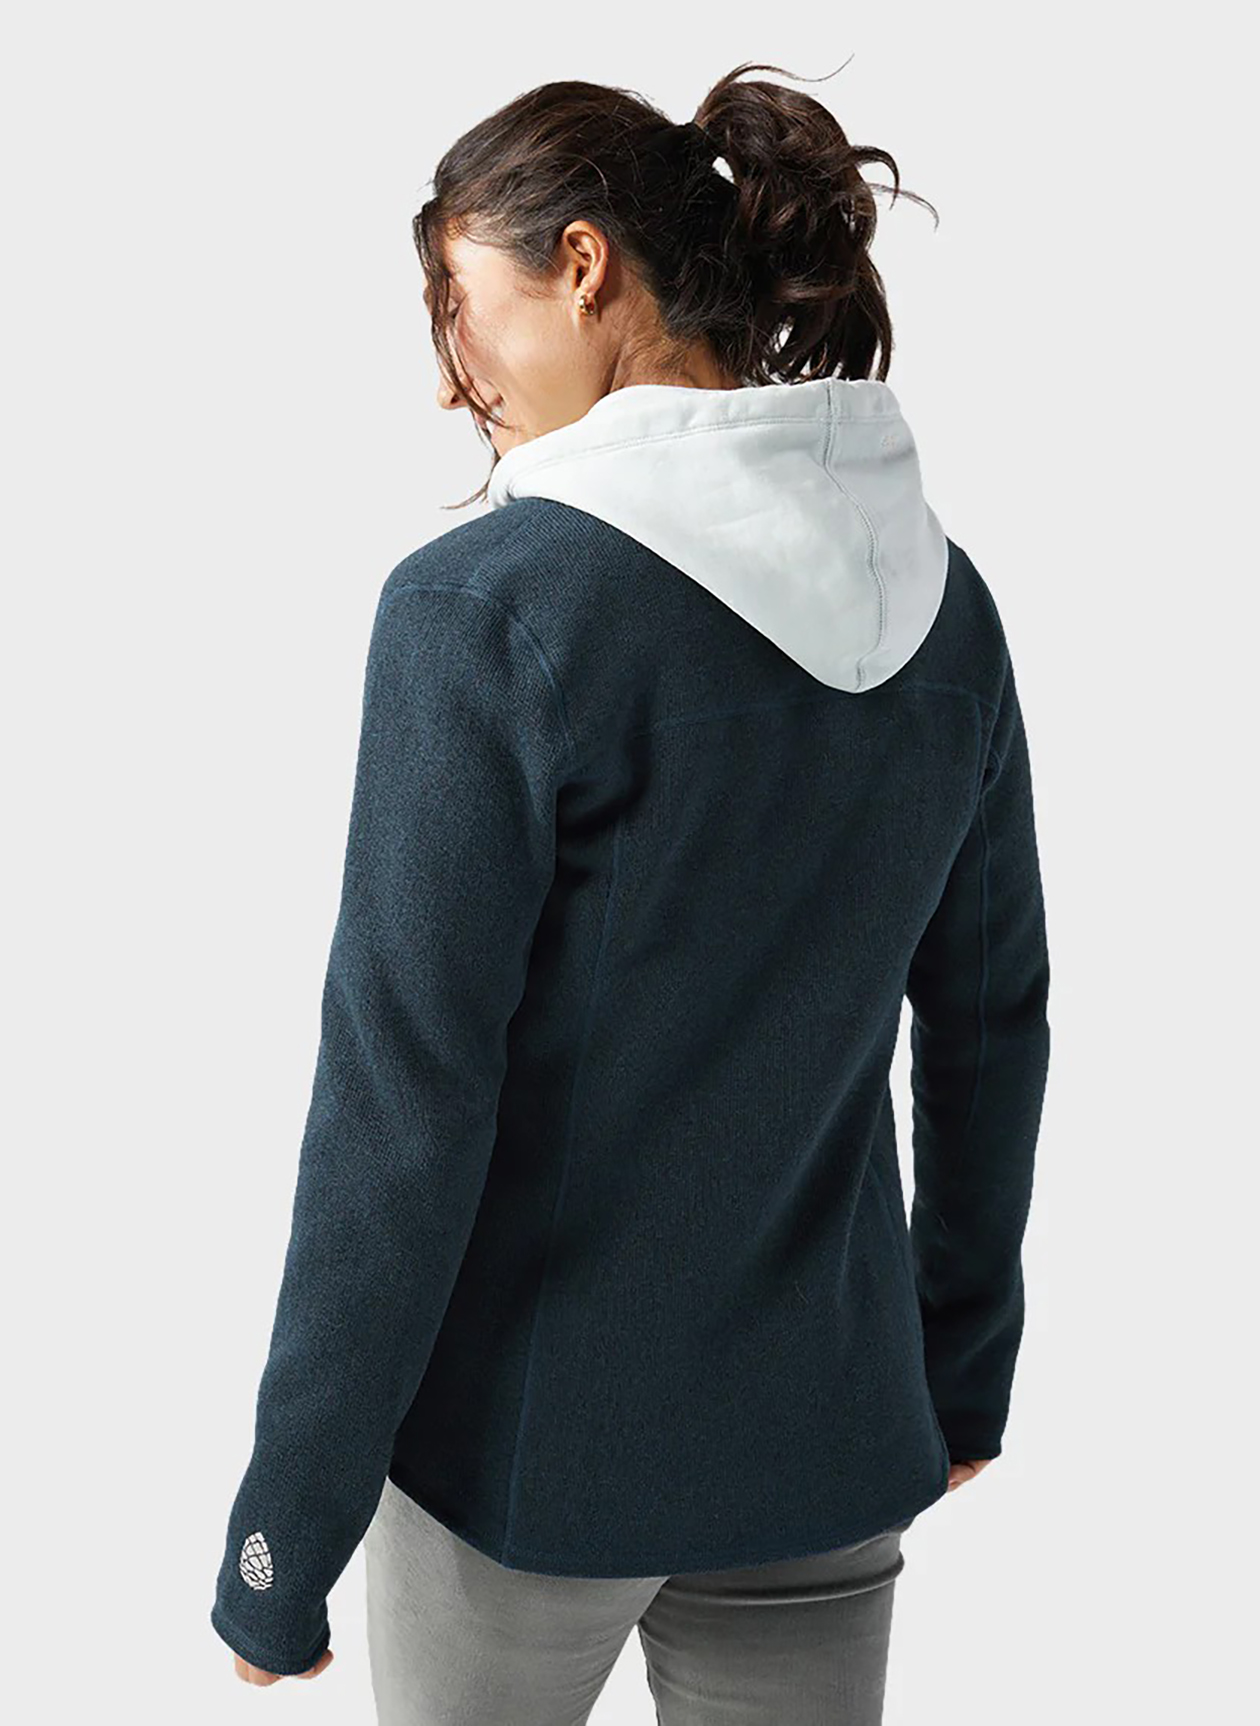 Custom Stio Women's Sweetwater Fleece Jacket